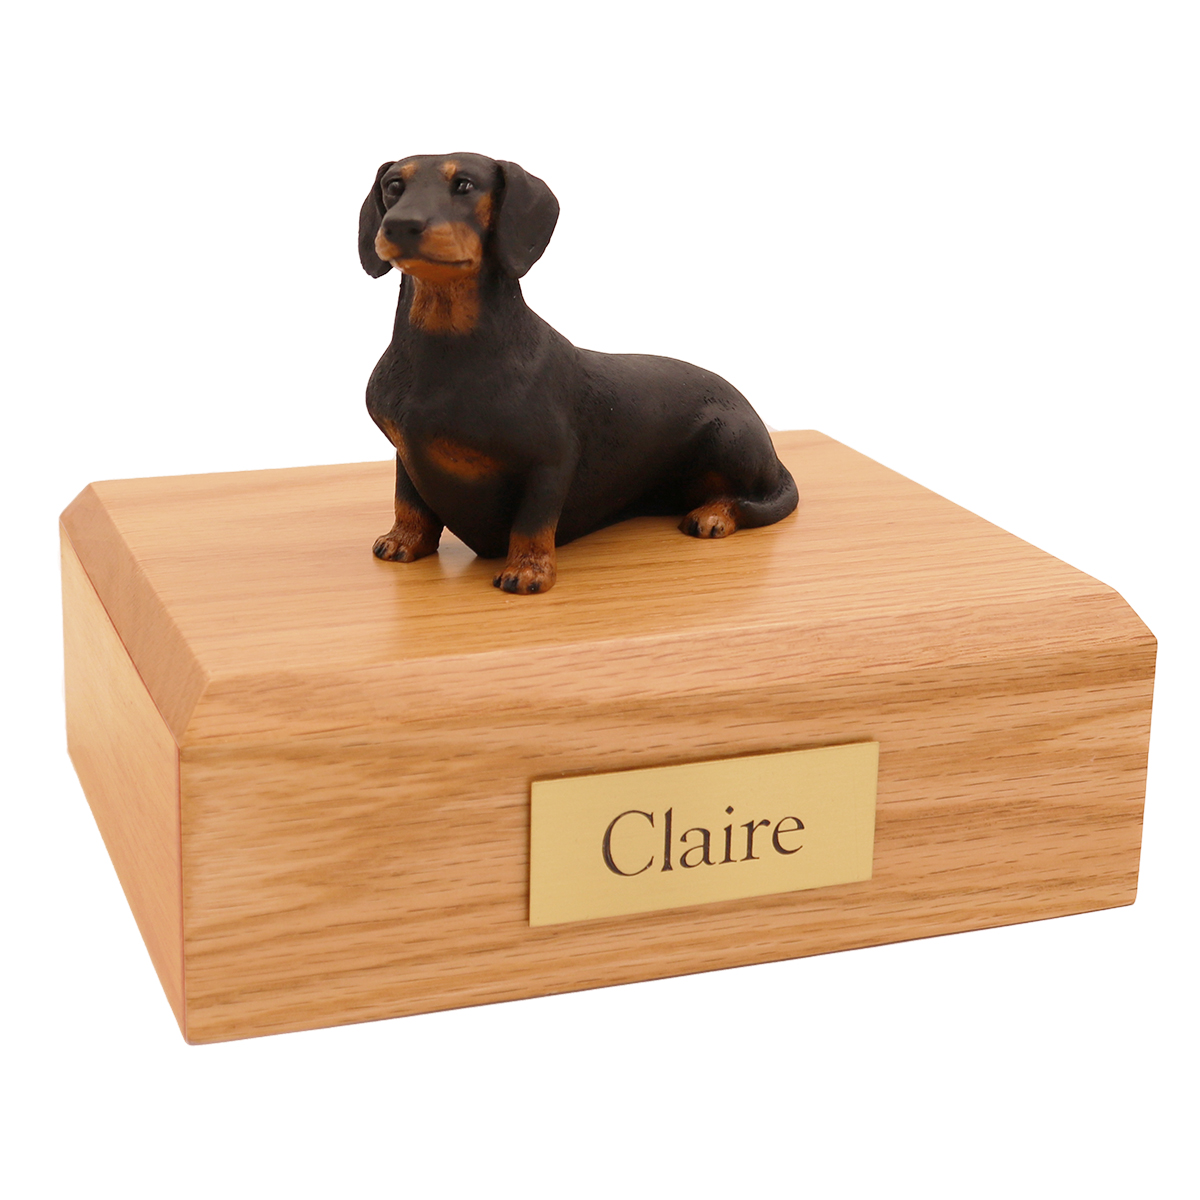 Dog, Dachshund, Black - Figurine Urn